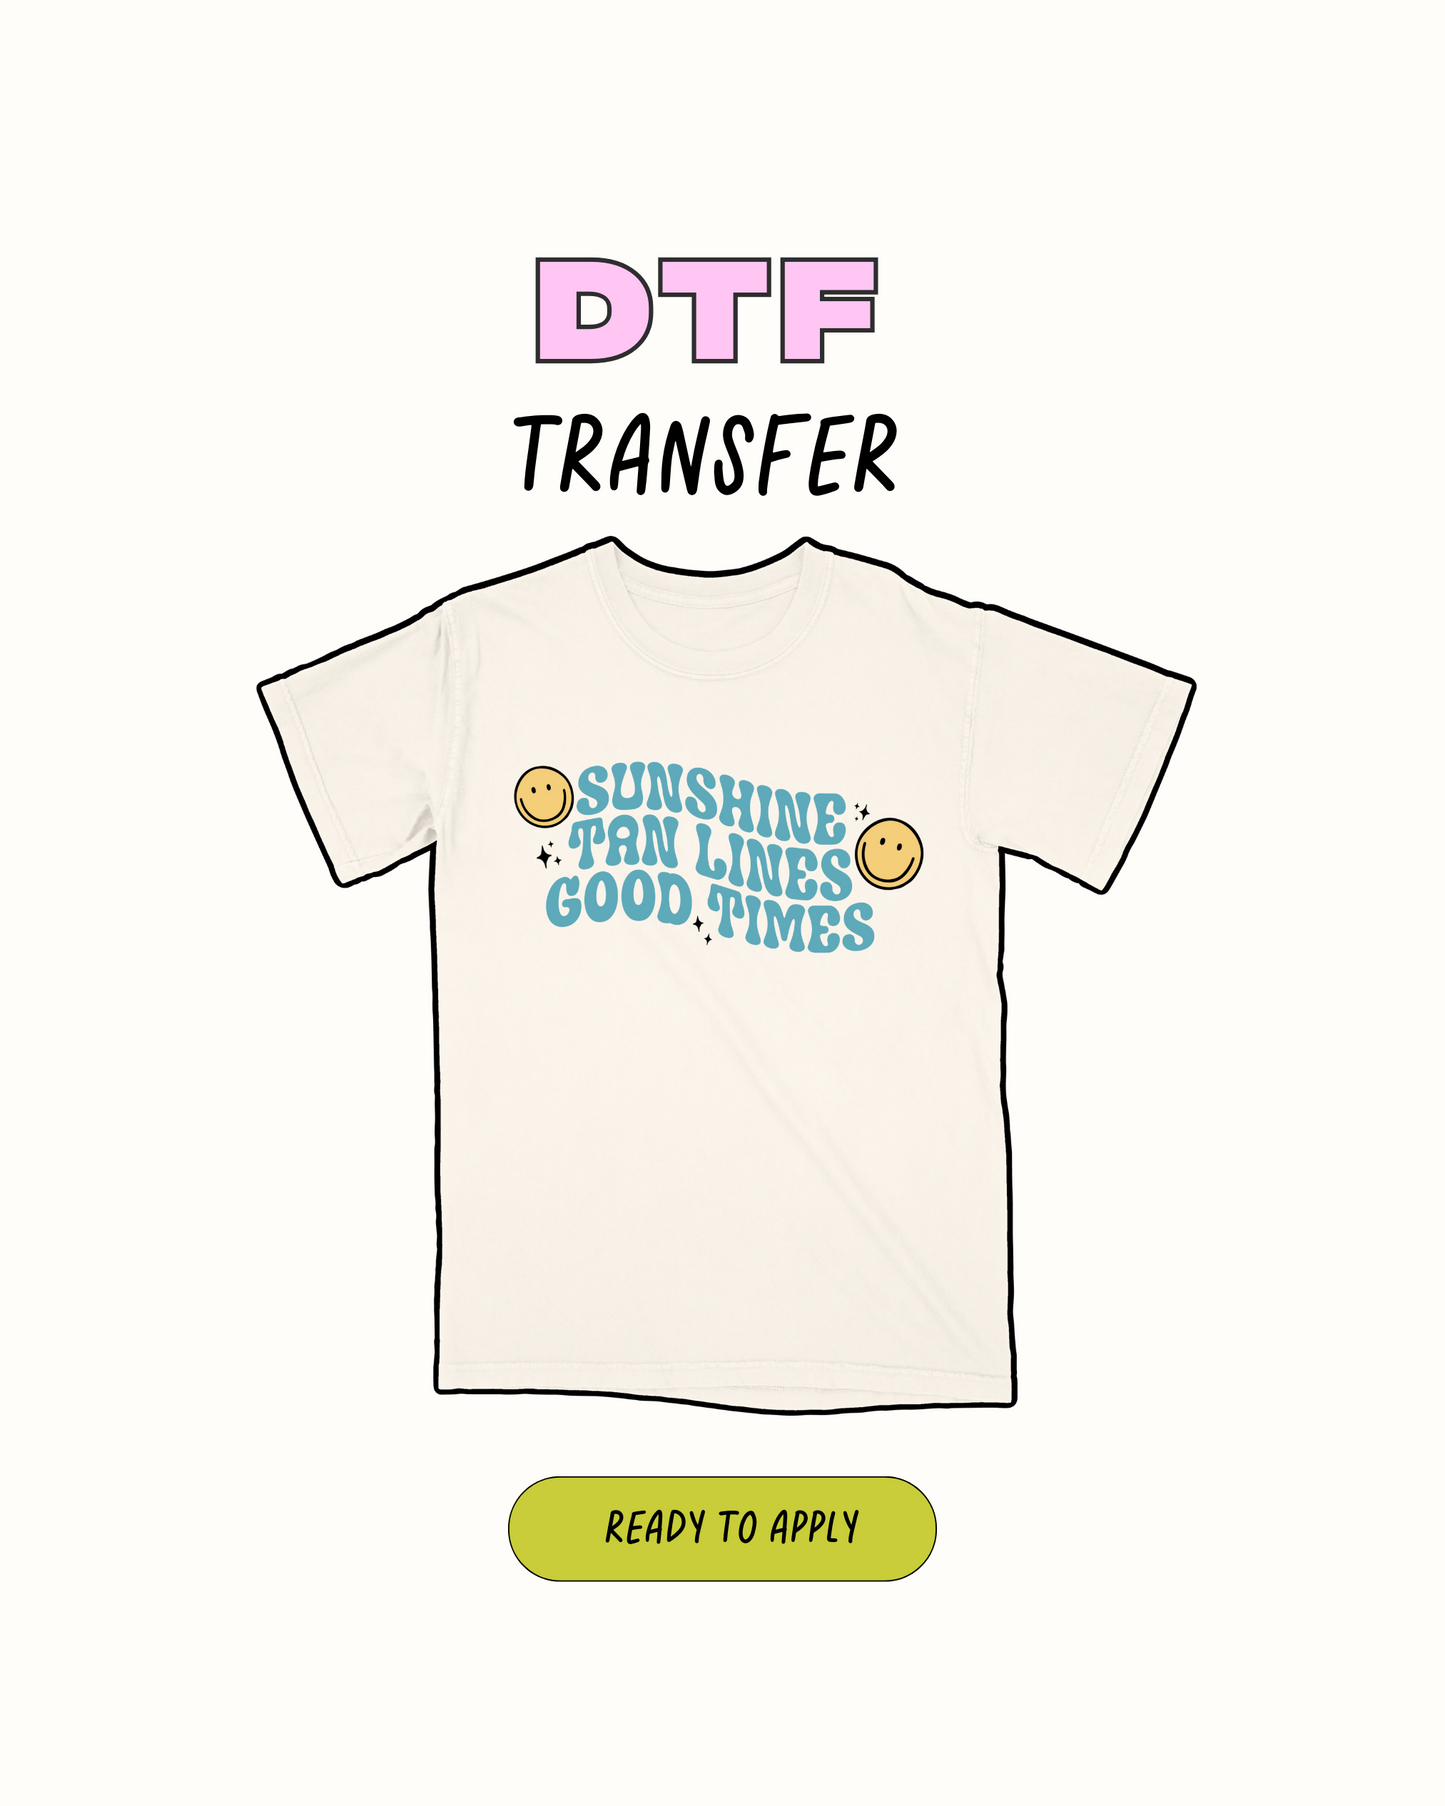 Good times - DTF Transfer